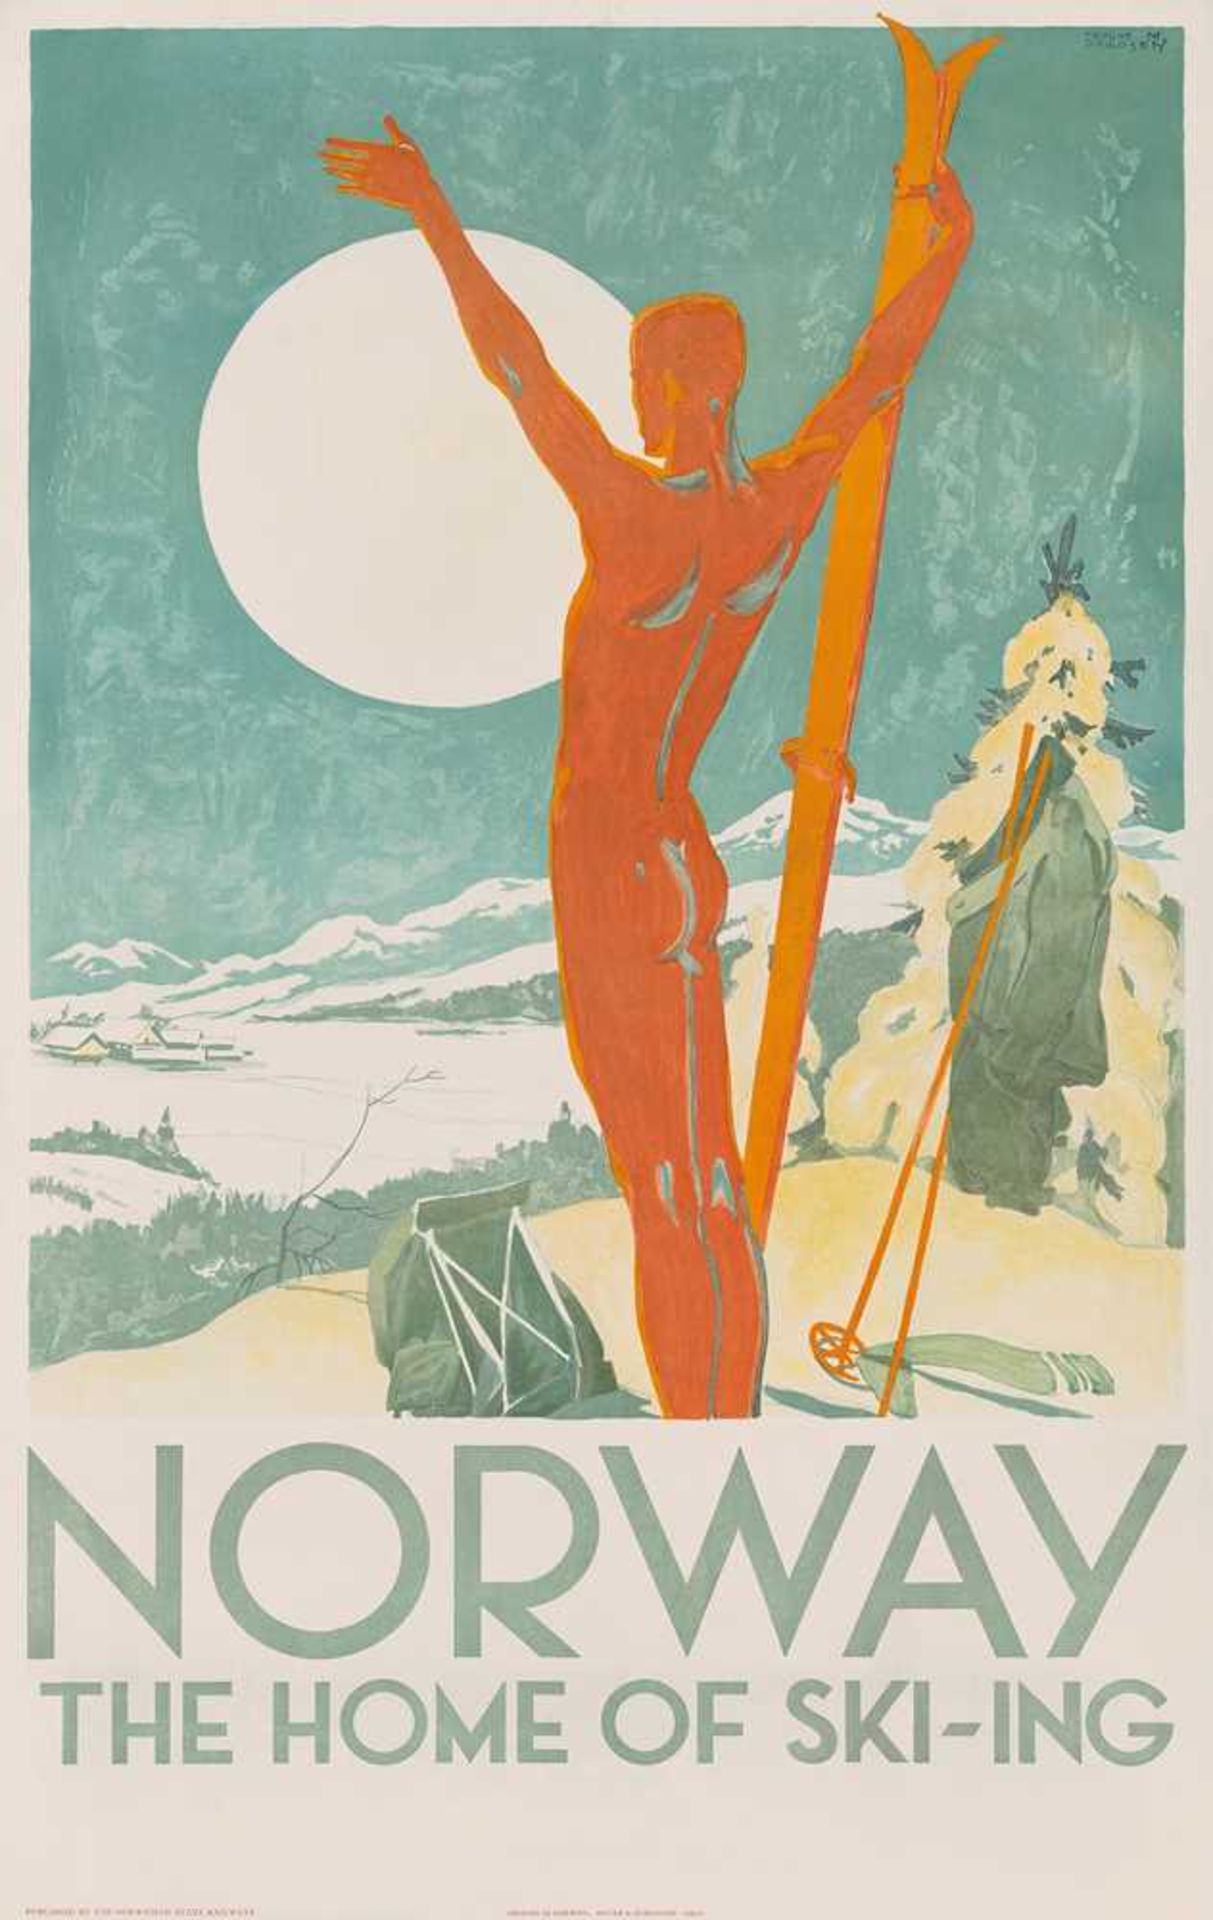 Trygve M Davidsen (1895-1978) Norway, The Home of Skiing